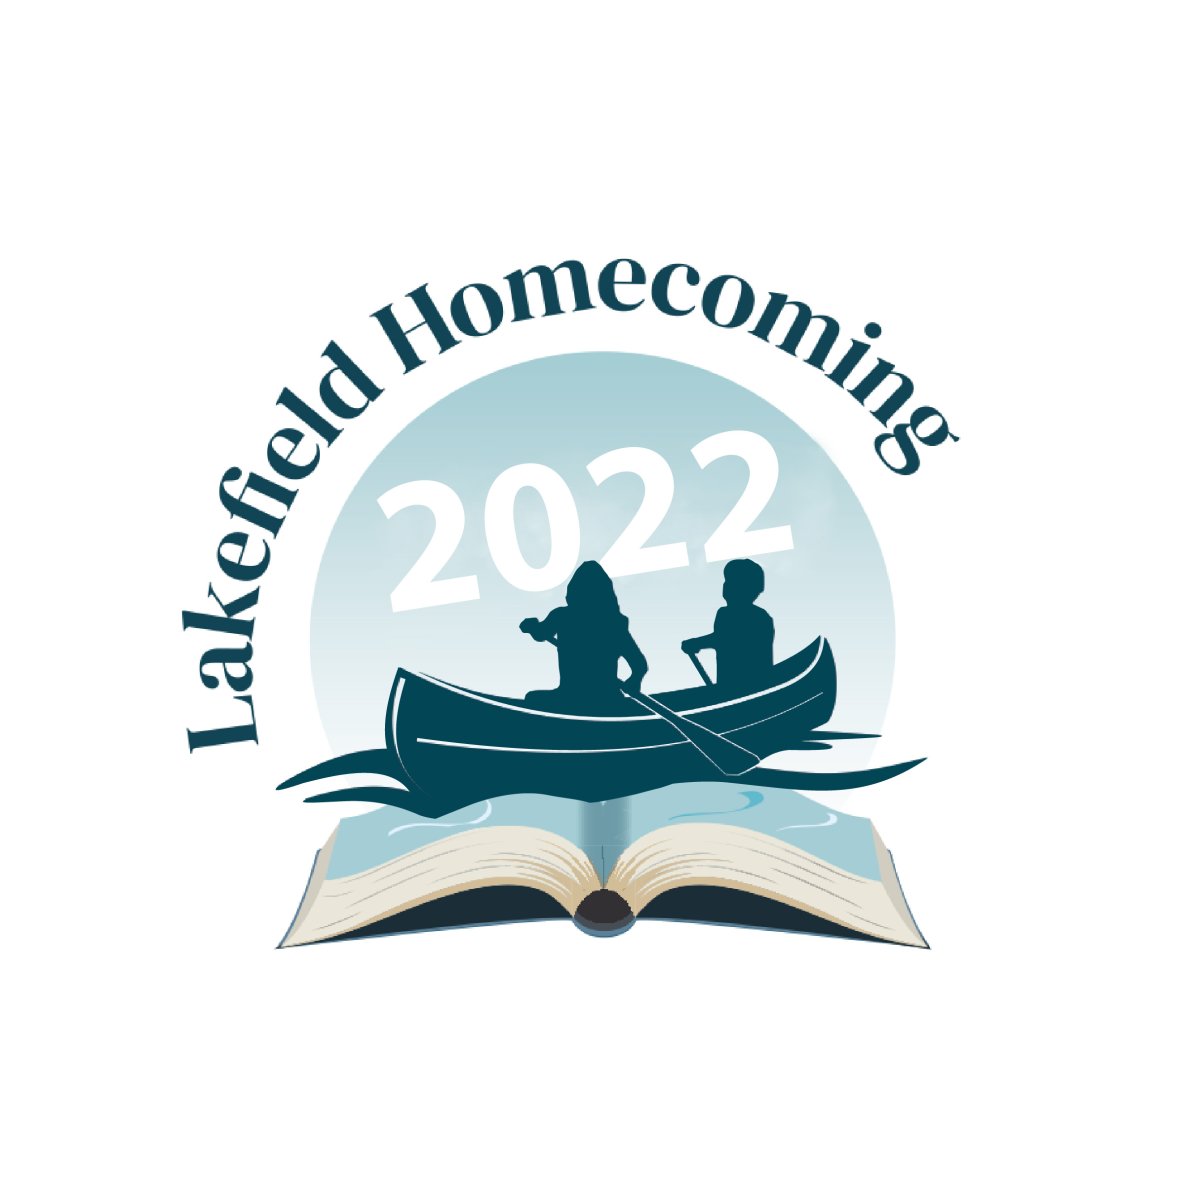 Lakefield Homecoming 2022 - image